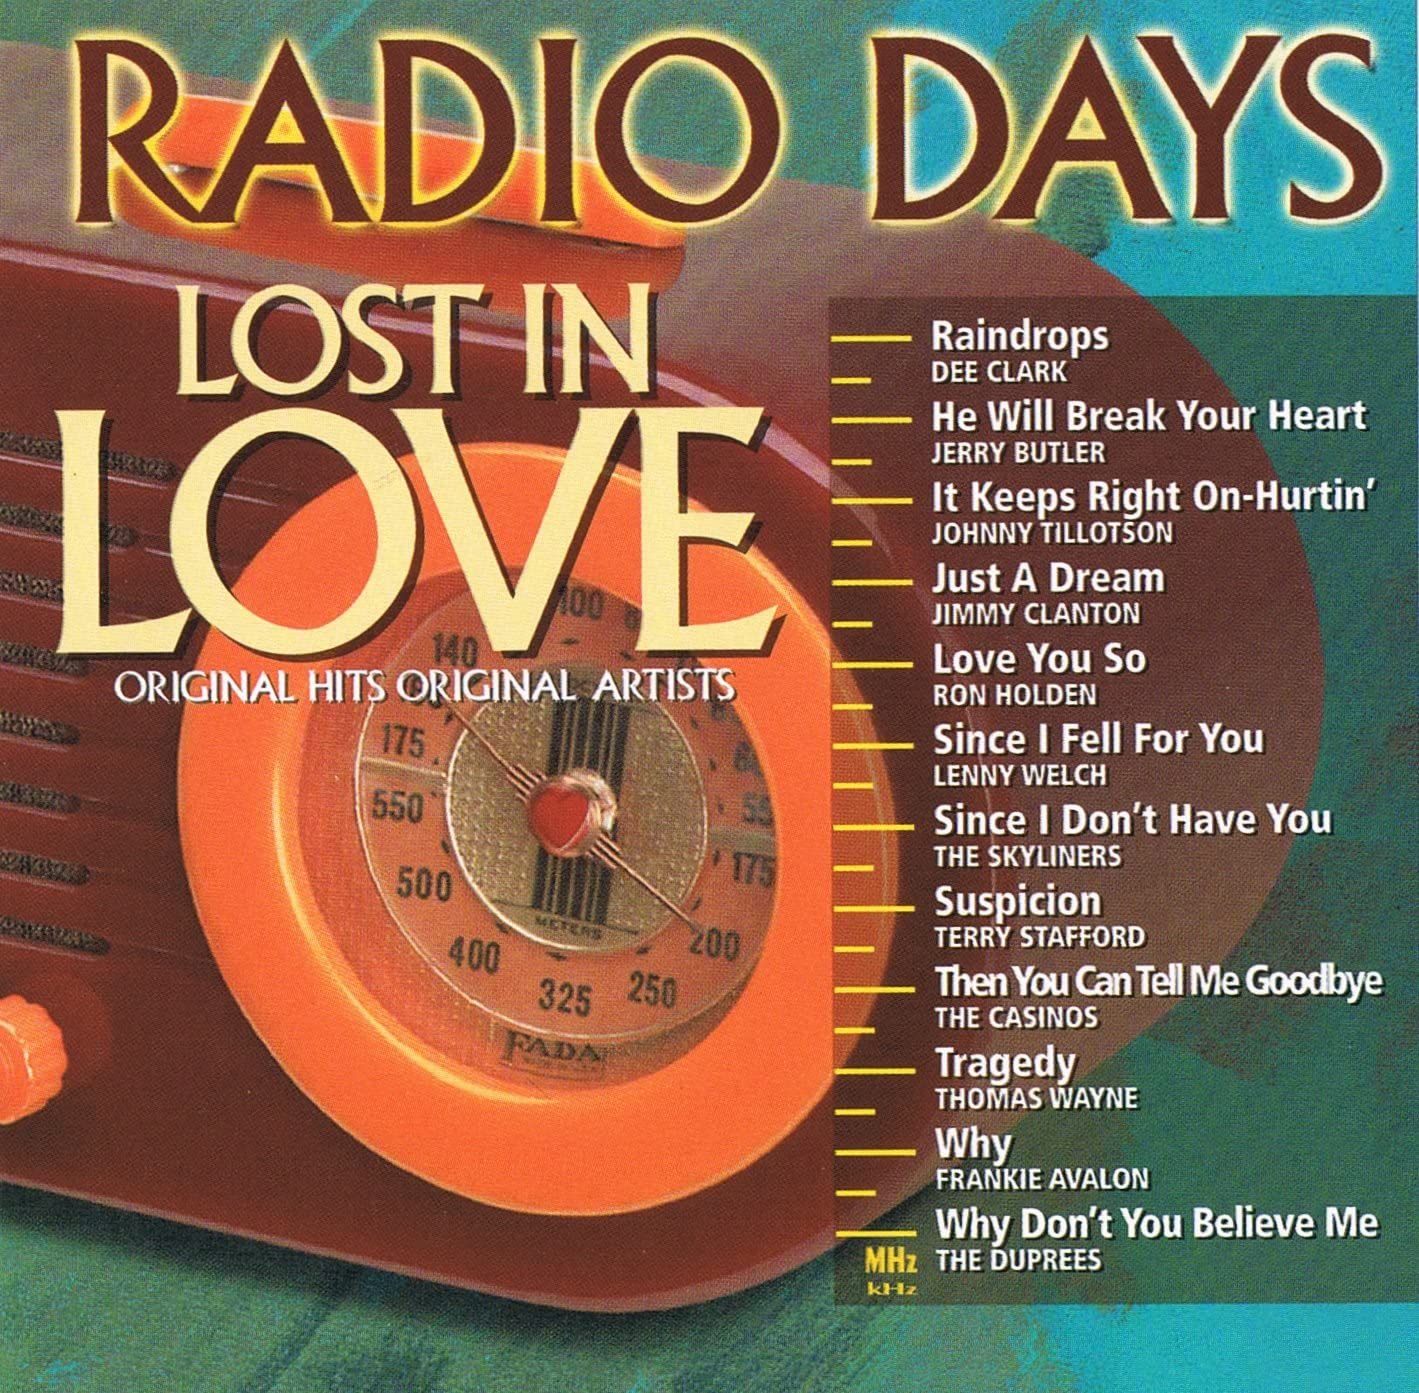 Radio Days - Lost in Love (12 Original Hits) [Audio CD] Various Artists